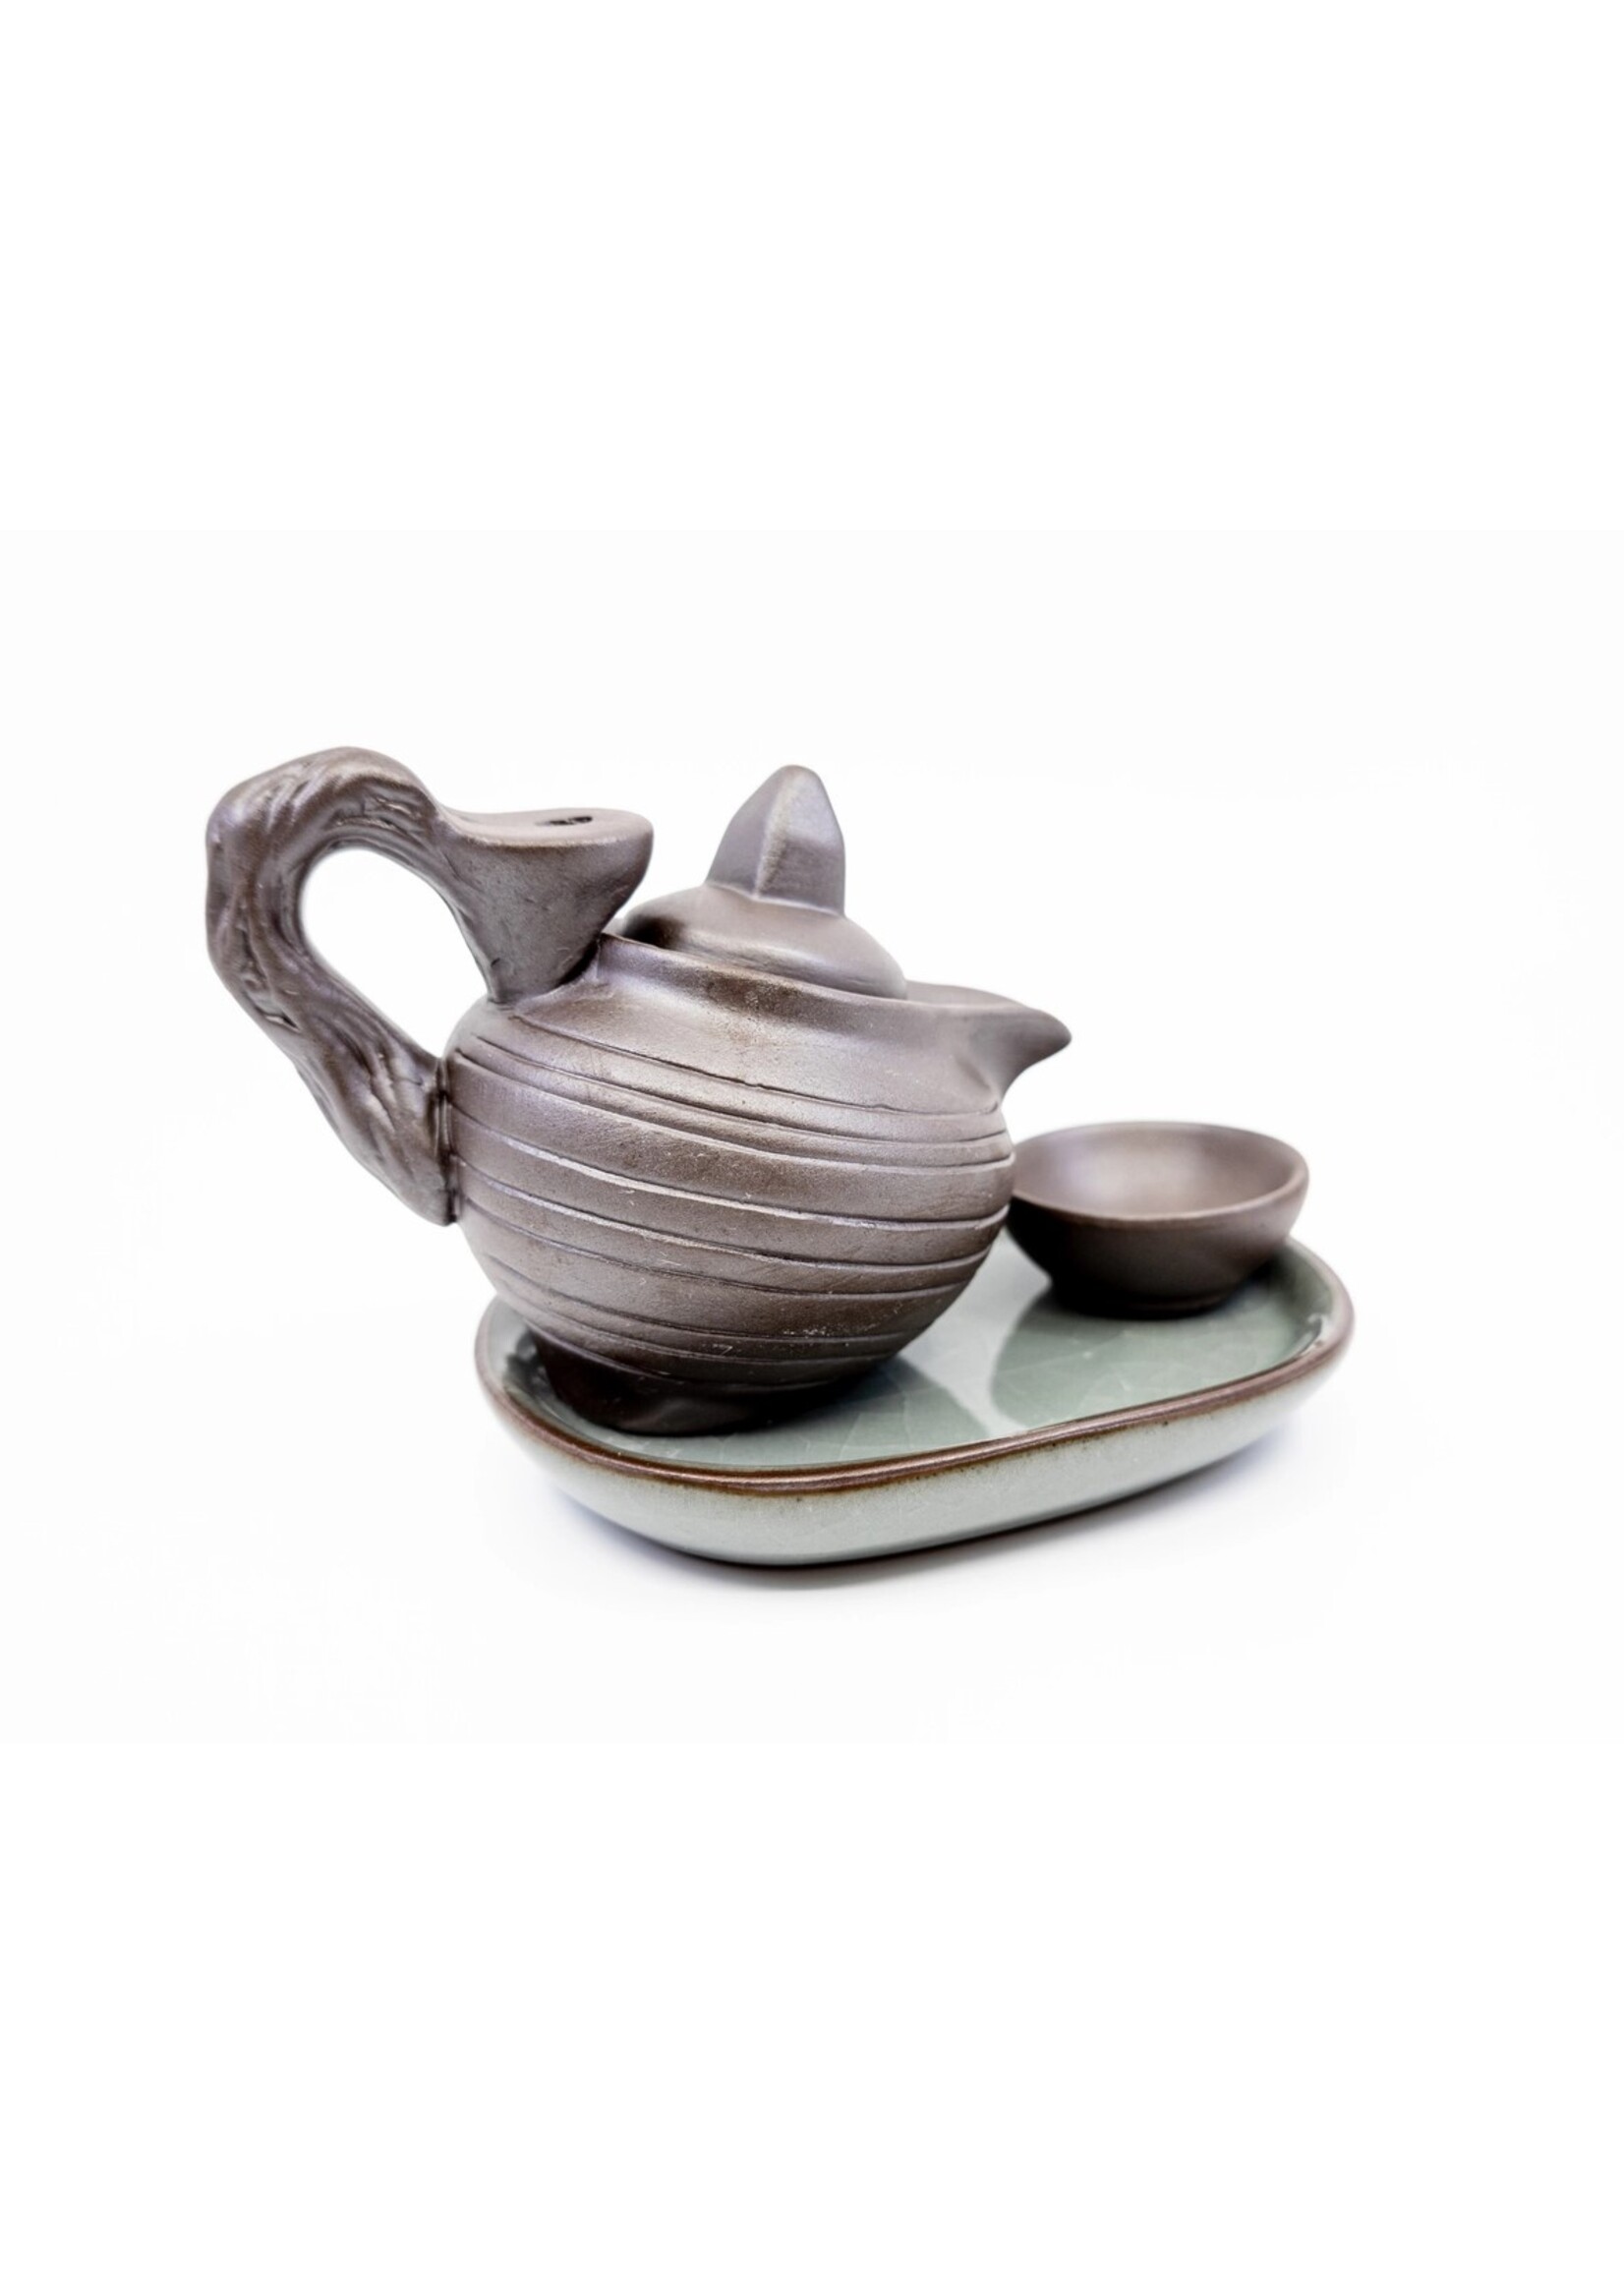 Celestial Habit Tint Teapot Ceramic Backflow Incense Burner